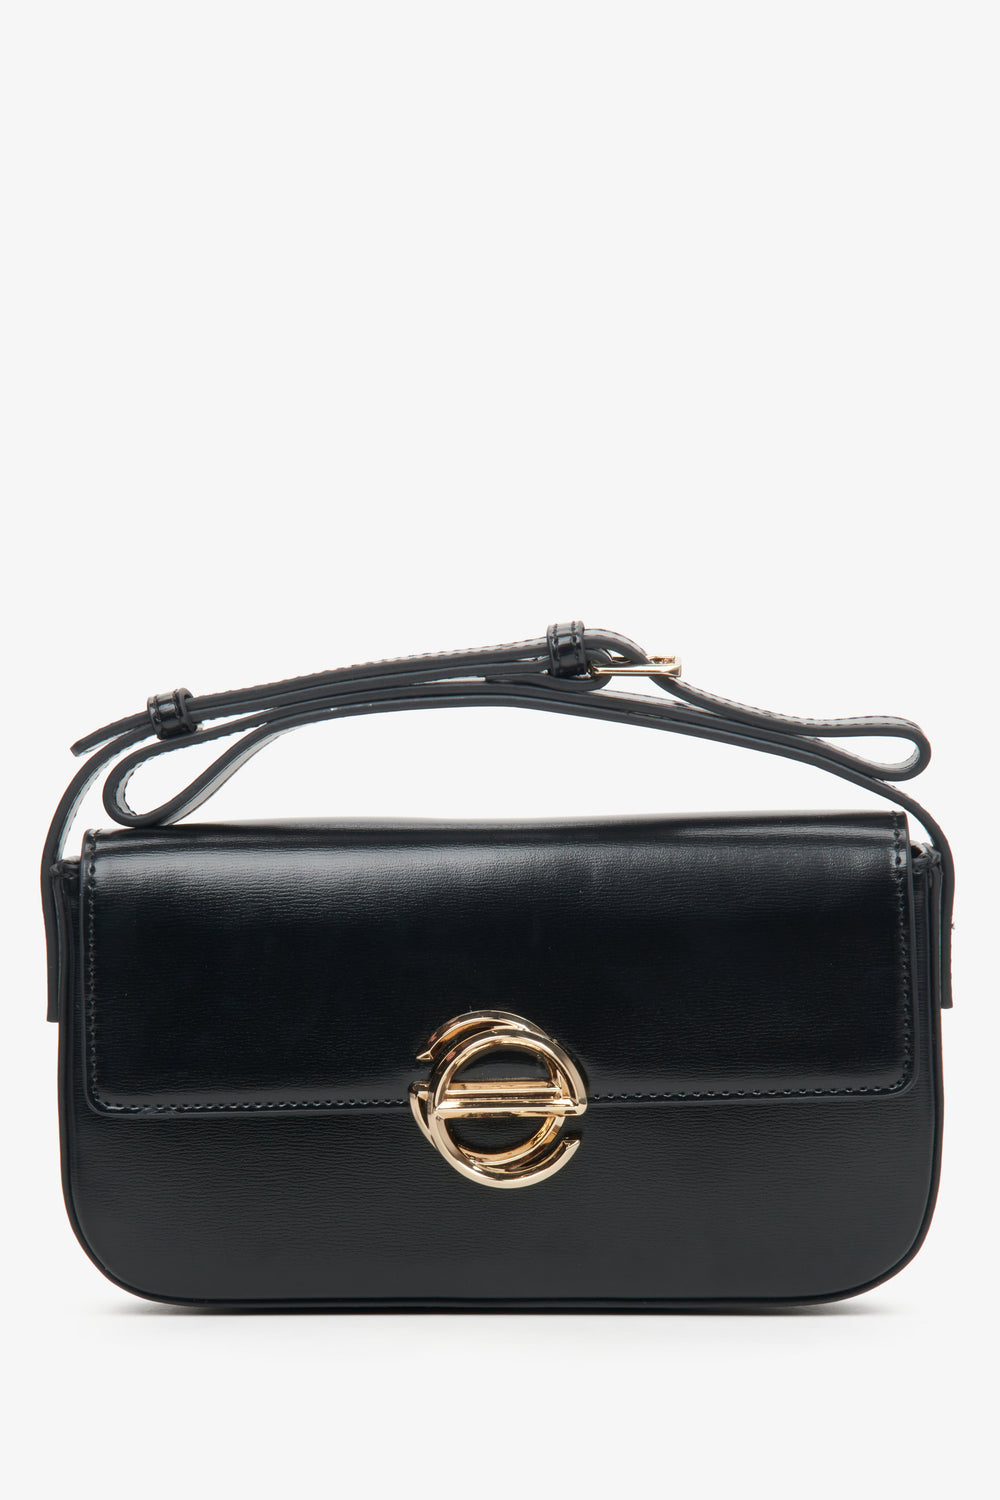 Women's leather black shoulder bag with golden hardware by Estro.